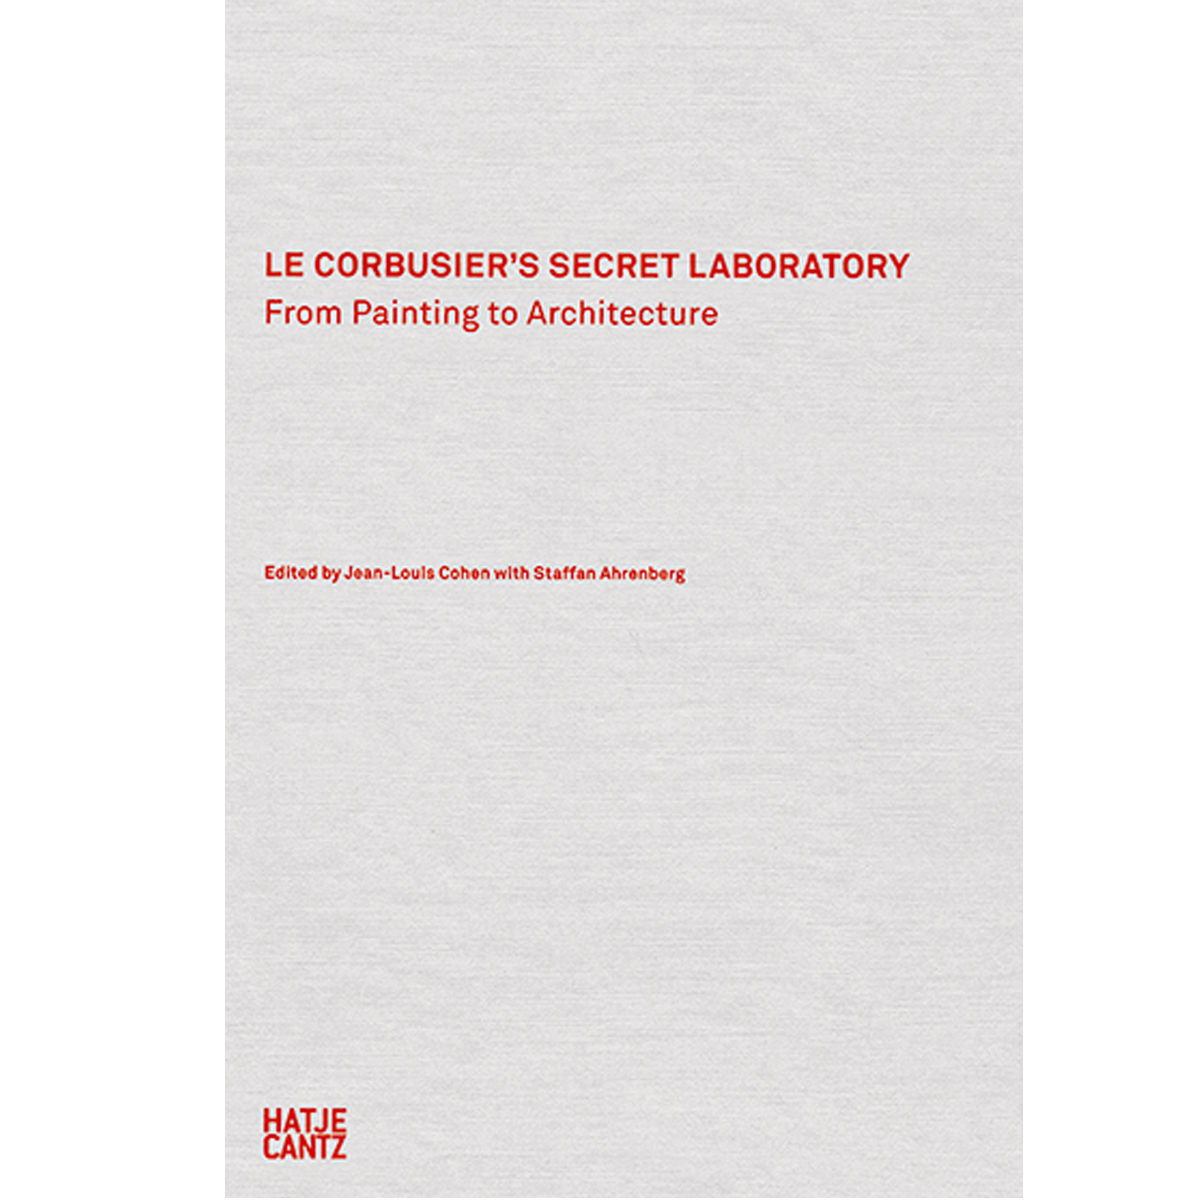 Le Corbusier’s Secret Laboratory